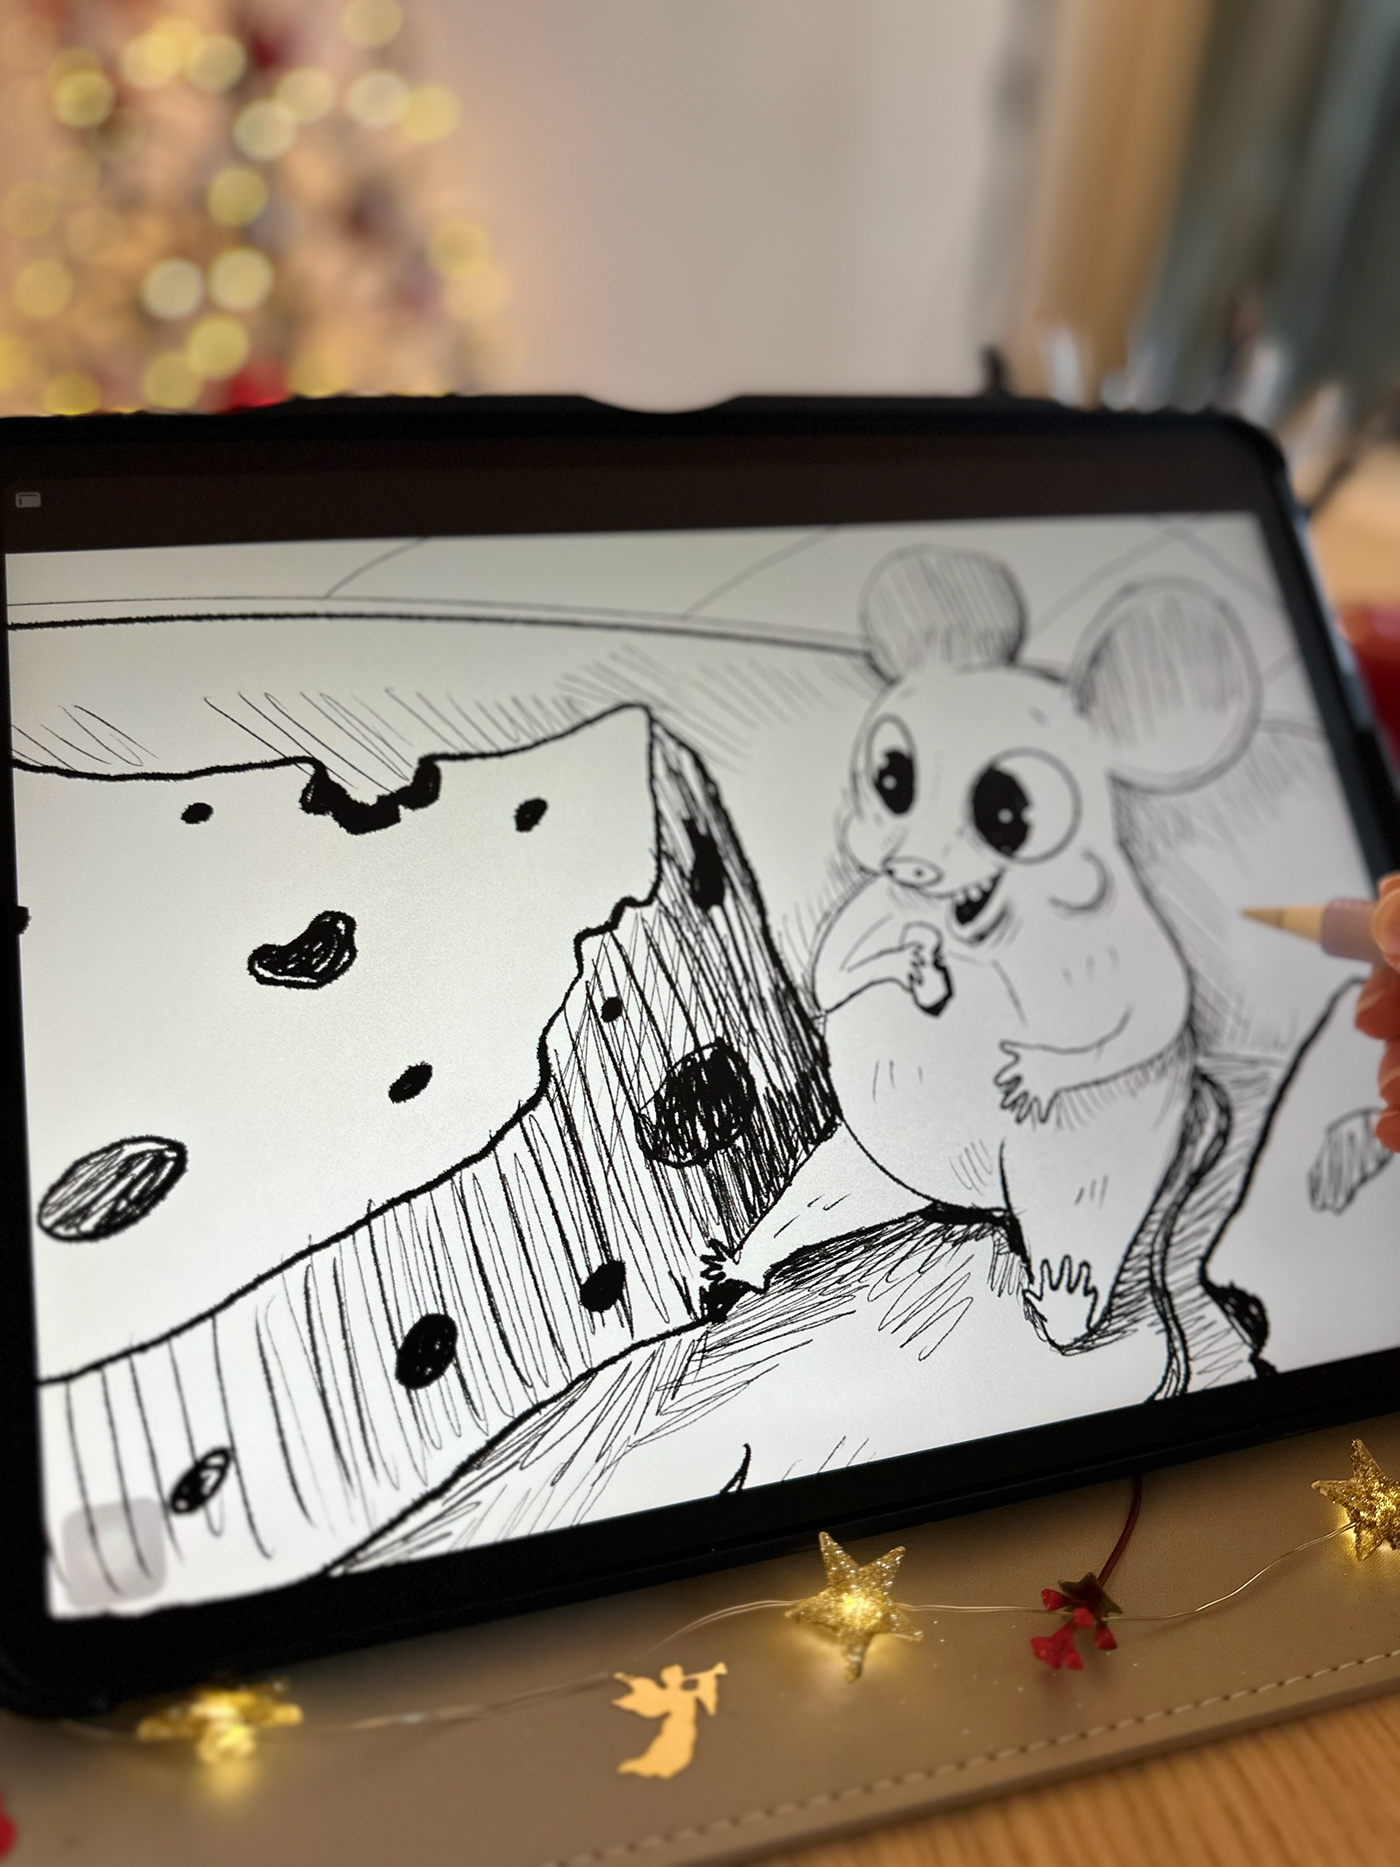 digitalart characterart characterdesign childrenbook painting   sketch doodle mouse Food  animalillustration ChildrenIllustration childrensbookillustration feasting